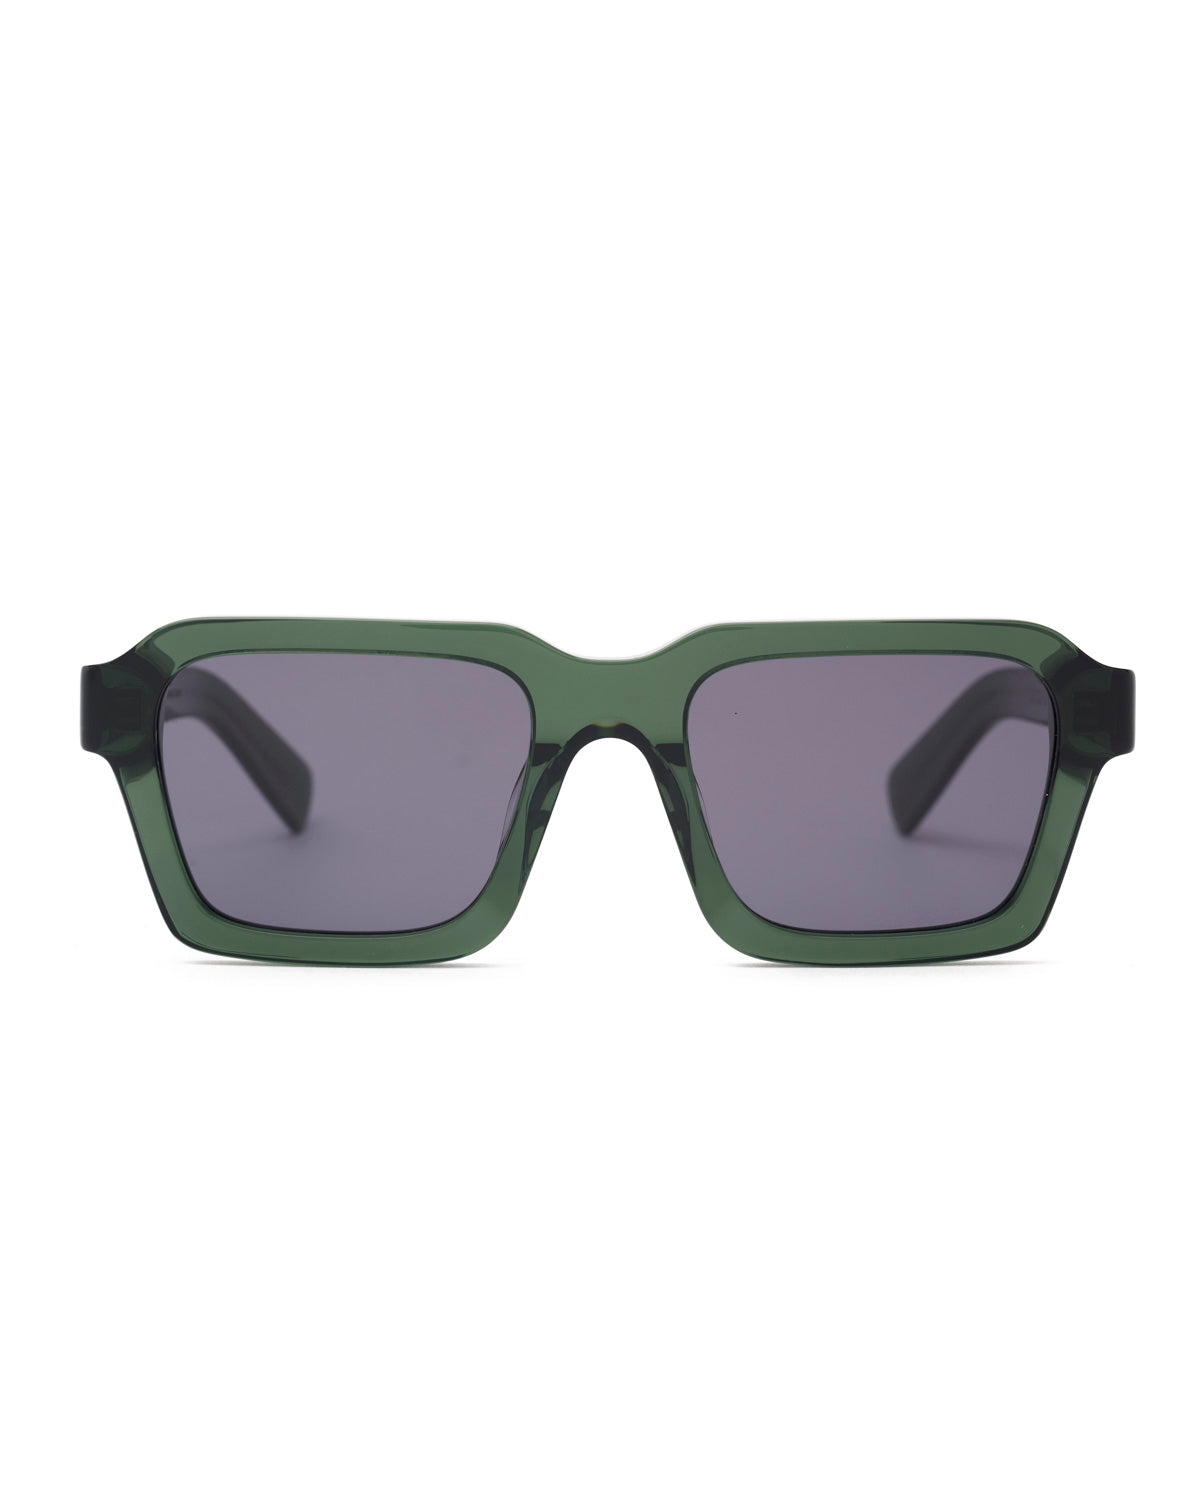 Staunton Post Modern Primitive Eye Protection - Green Smoke 1